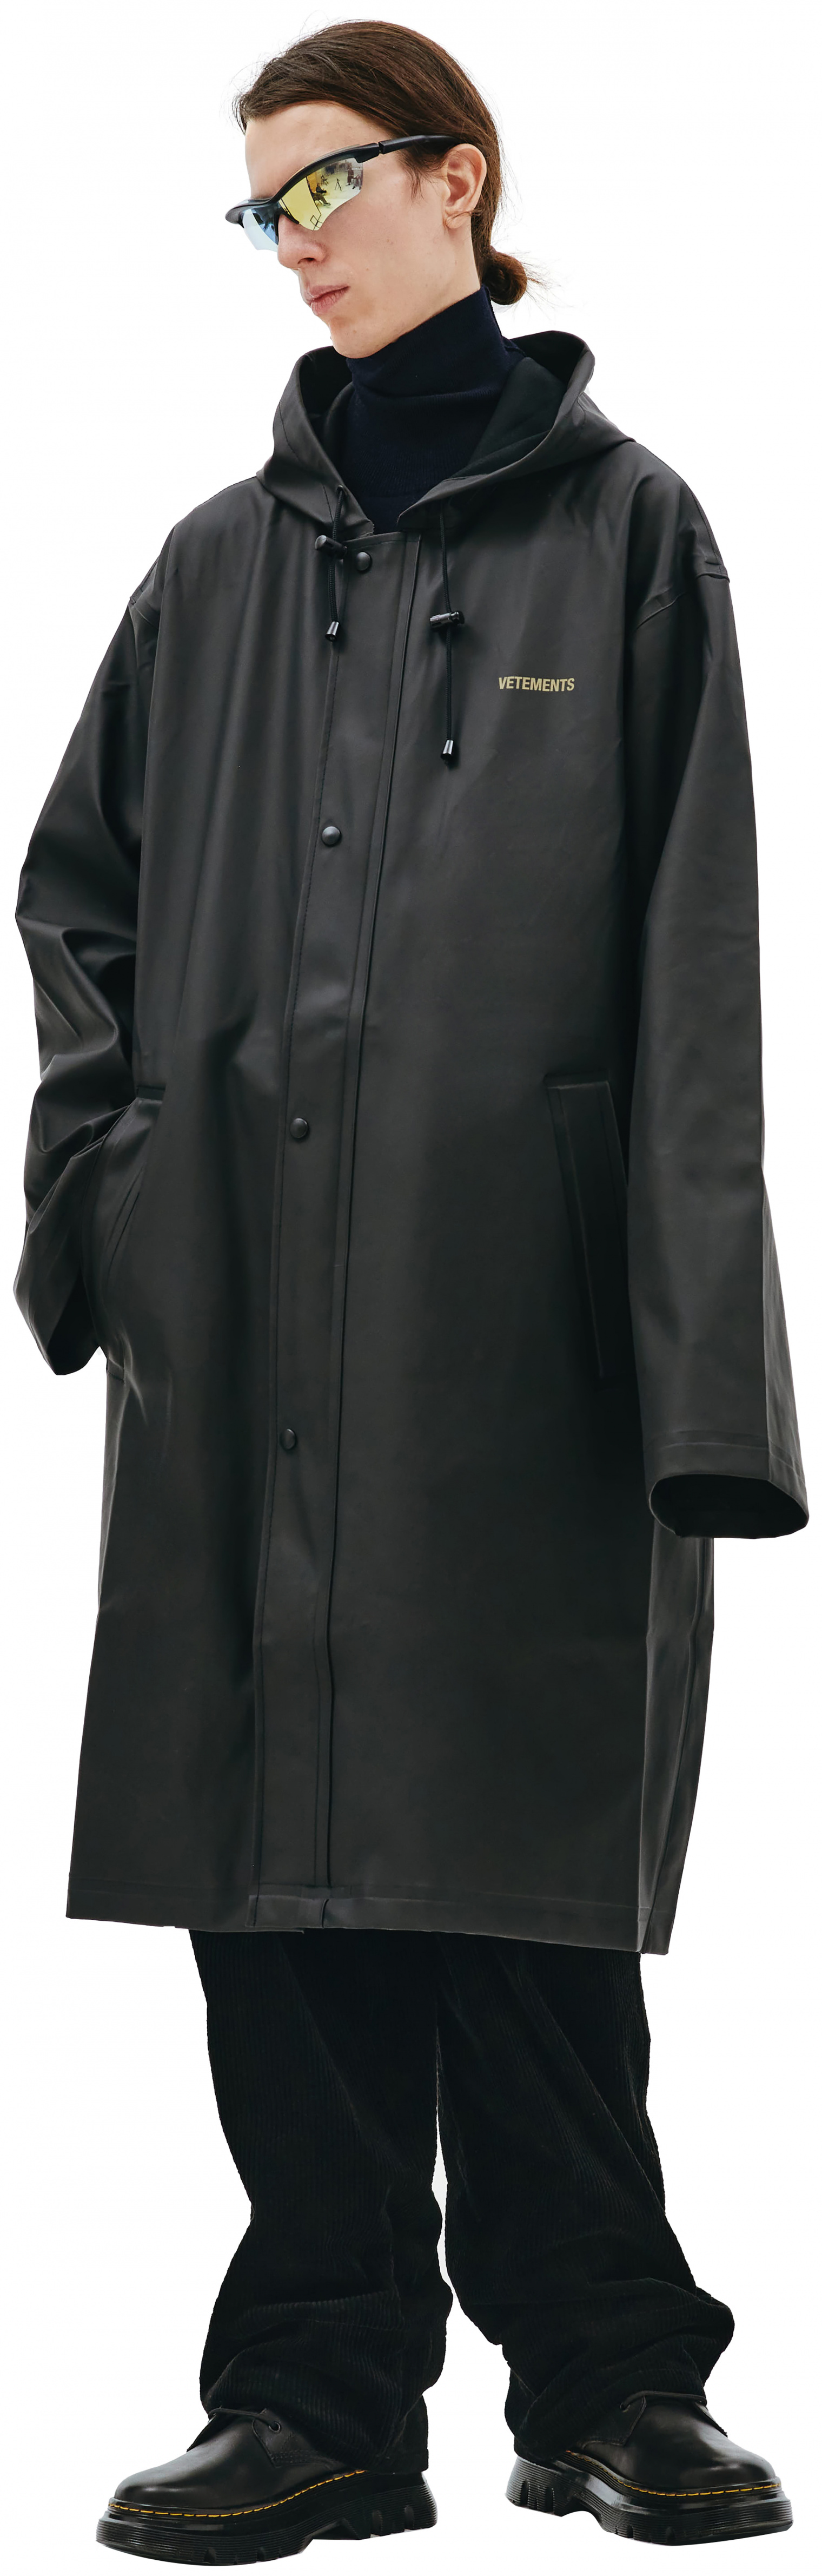 Buy VETEMENTS men black rain coat with logo for $432 online on 